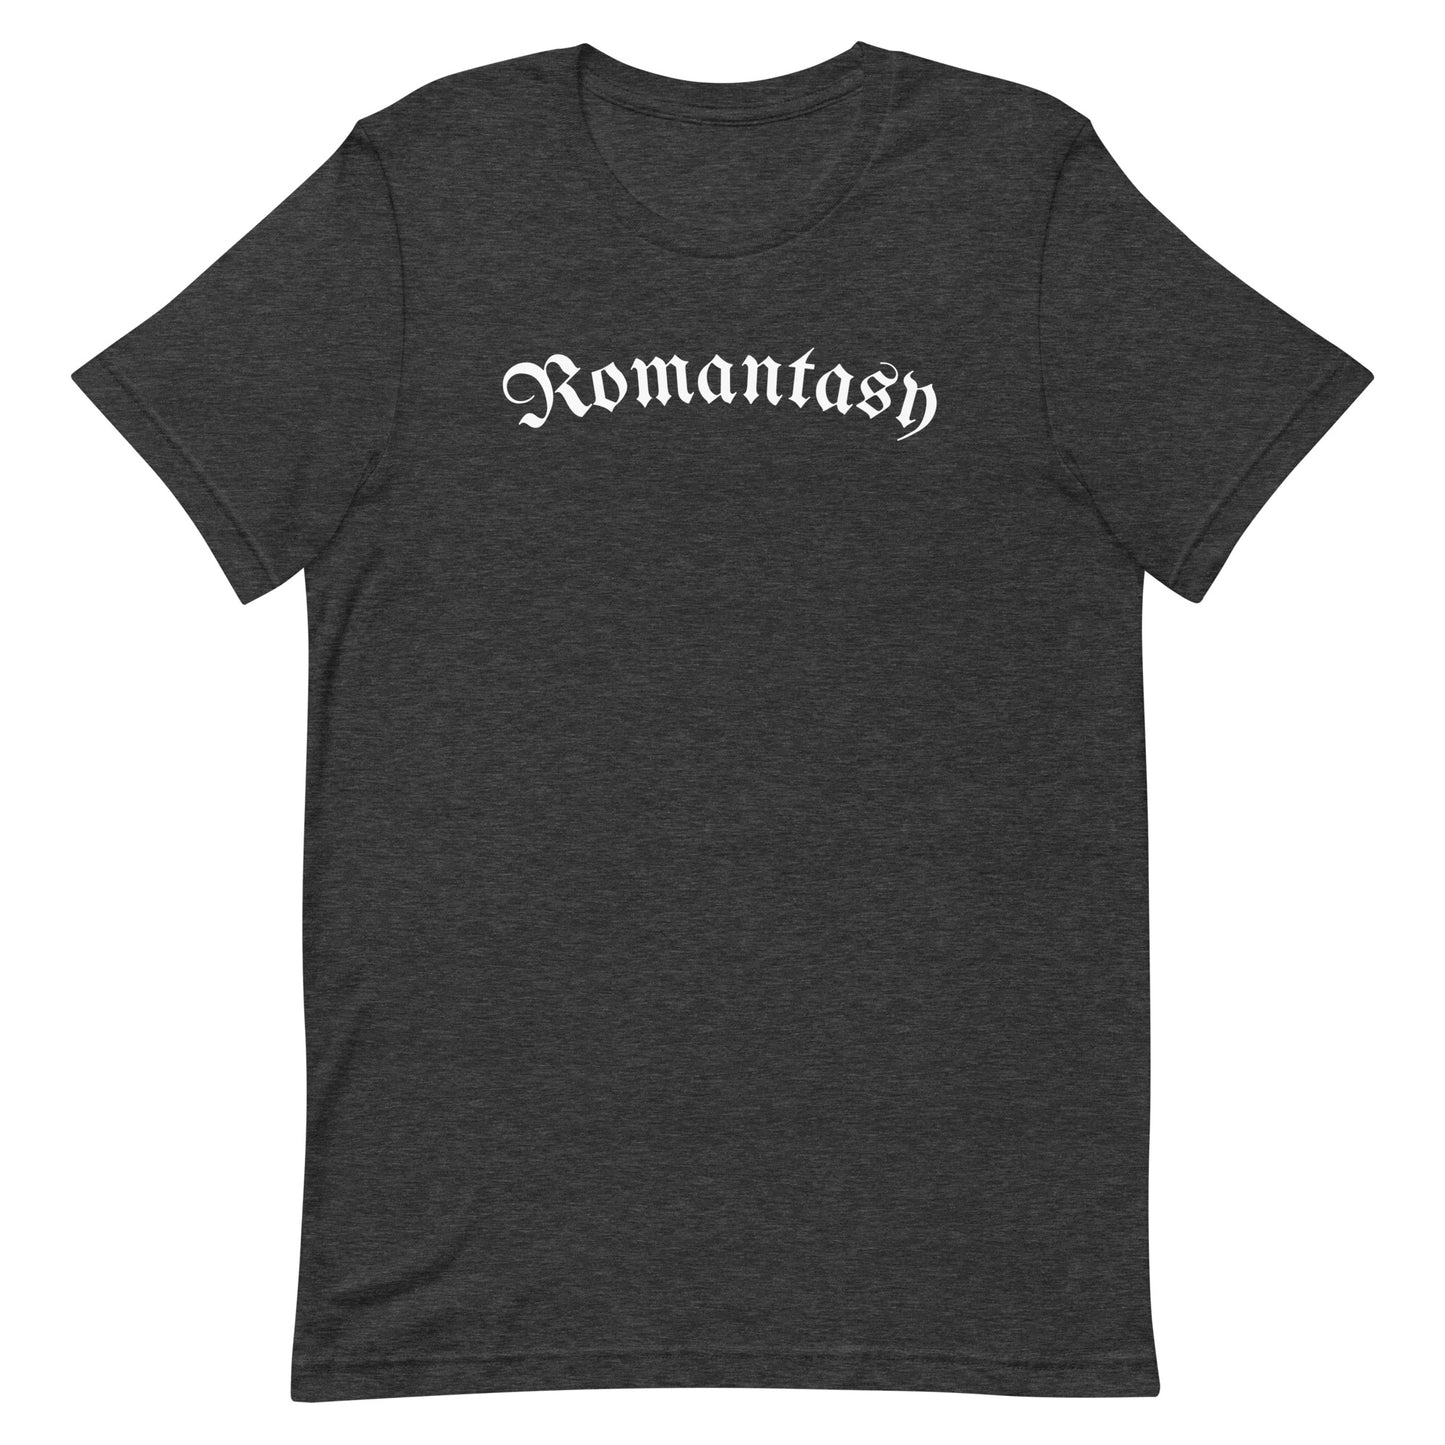 Front side- Romantasy Romance Fantasy Book Tee T-shirt